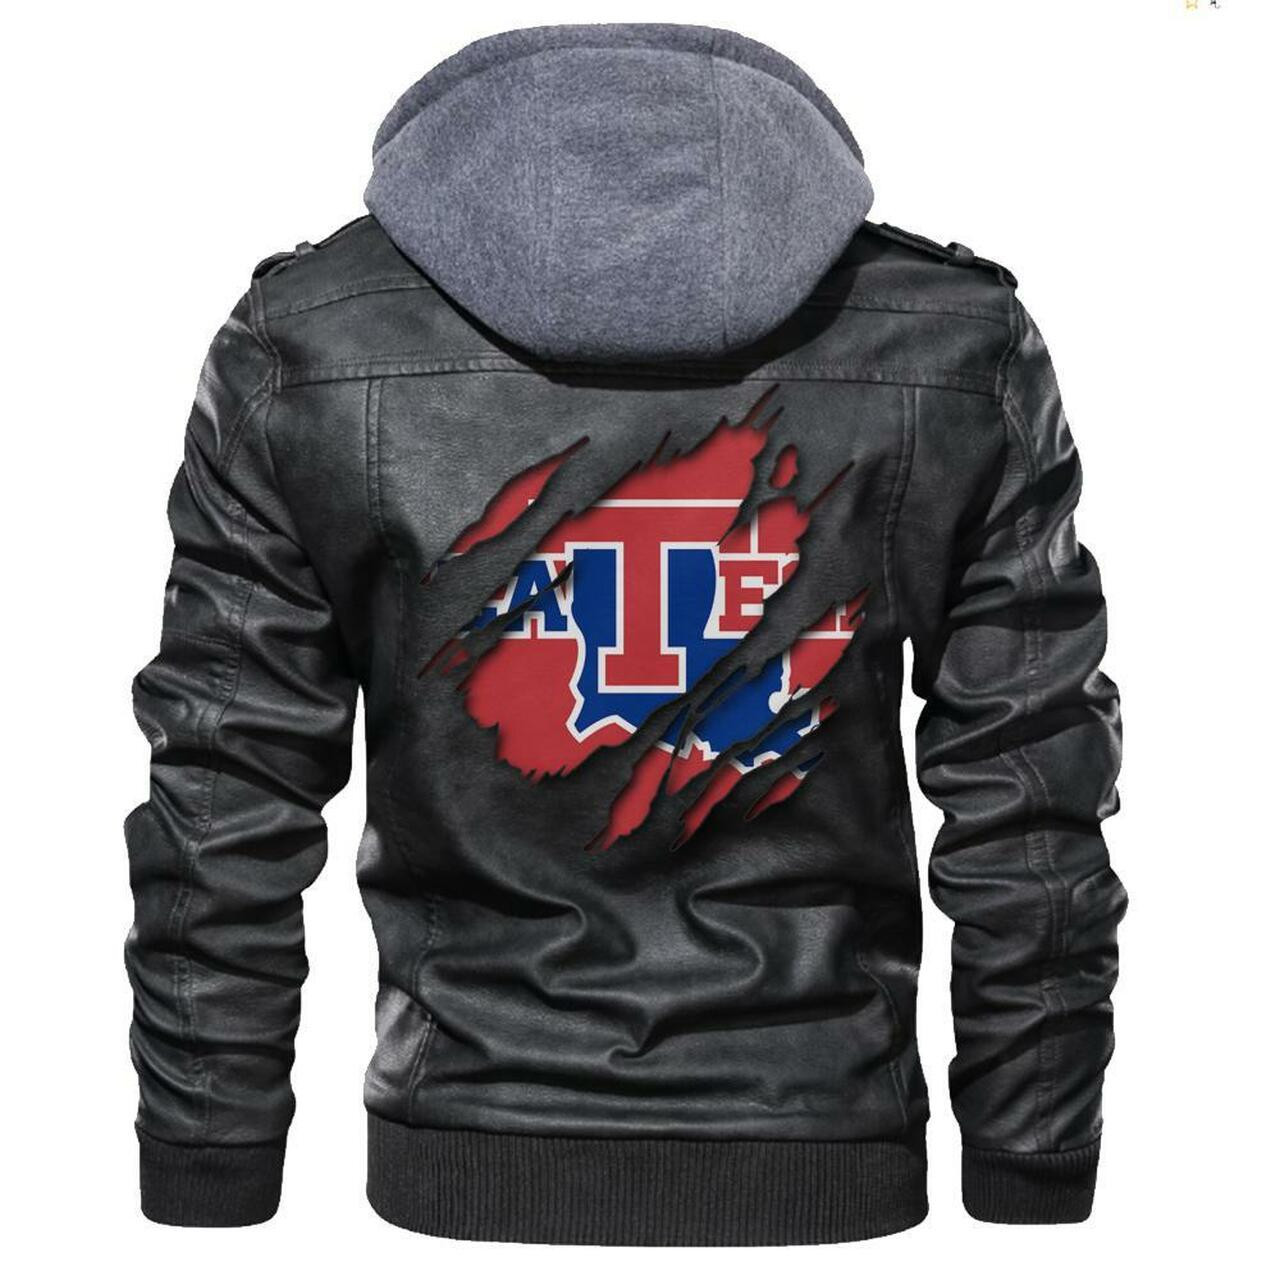 Top leather jacket Sells Best on Techcomshop 23